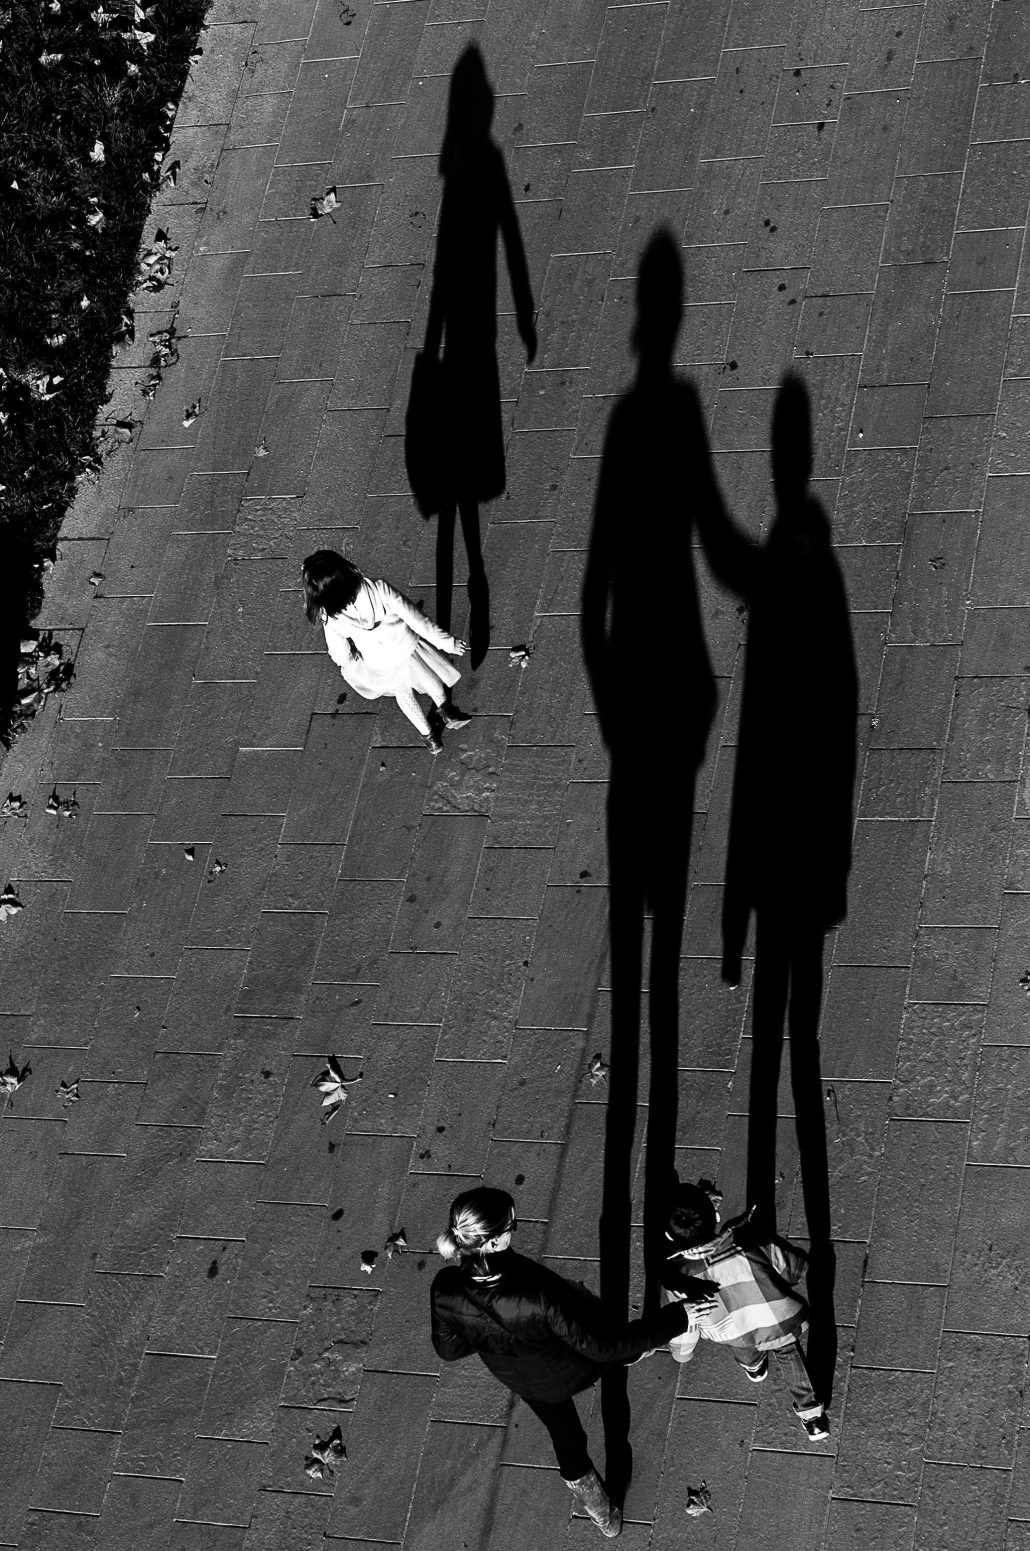 Shadow me